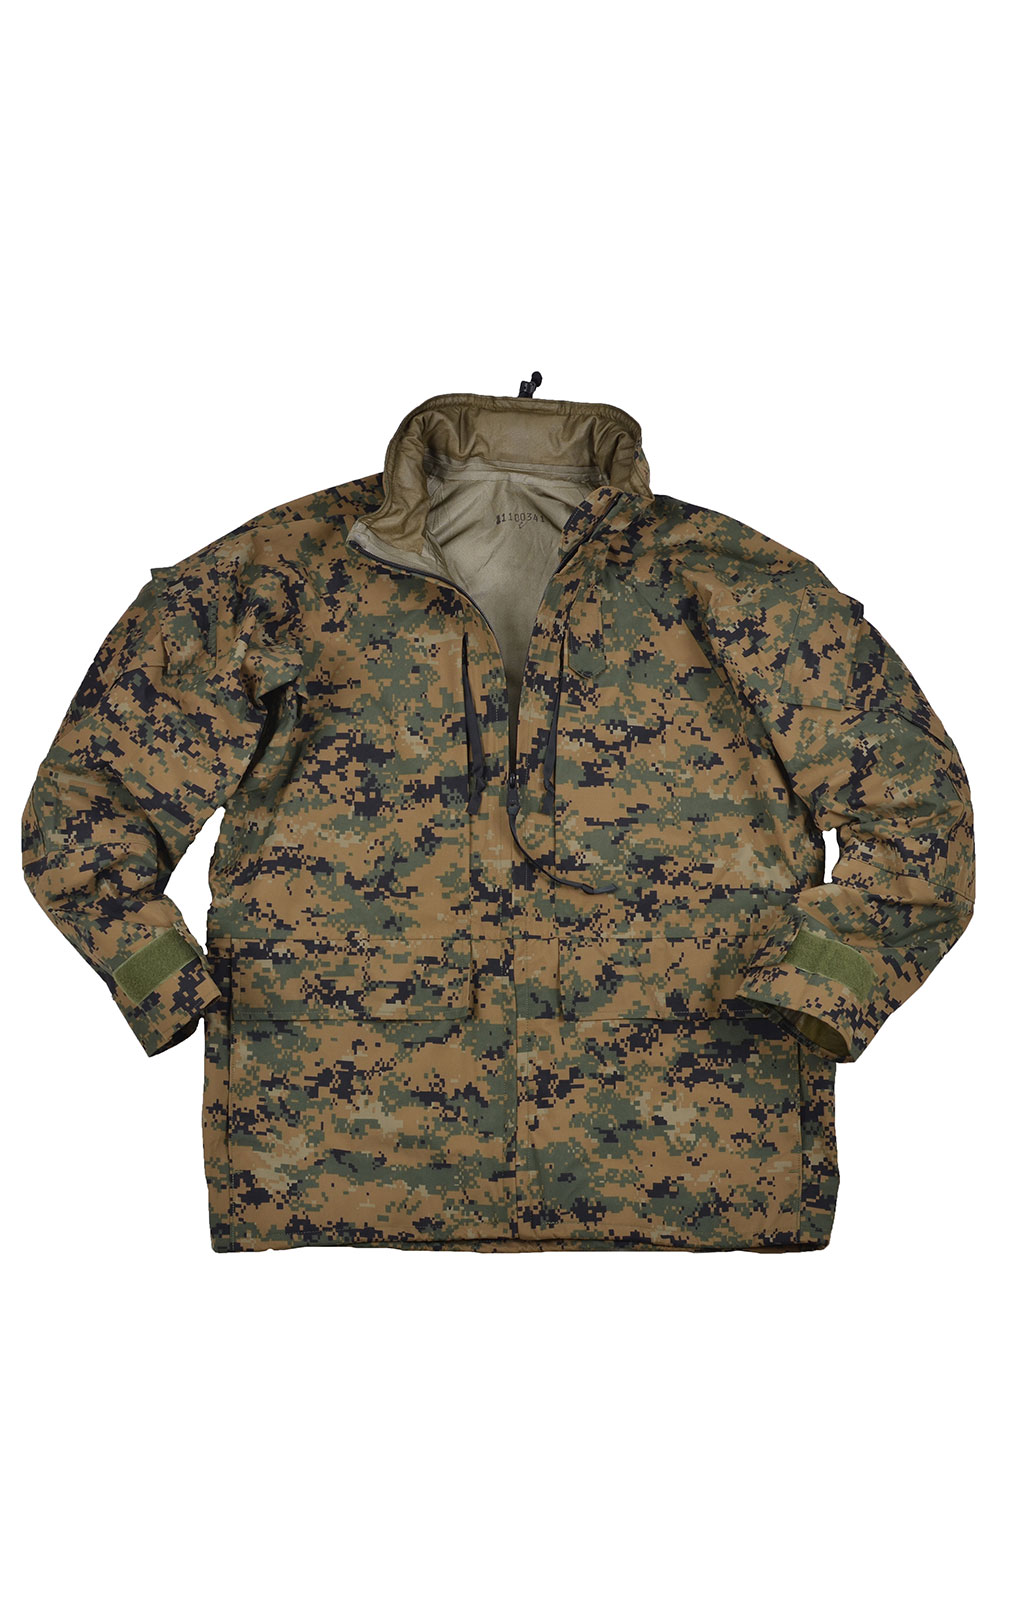 Куртка непромокаемая Gore-Tex USMC Gore-Tex marpat woodland США